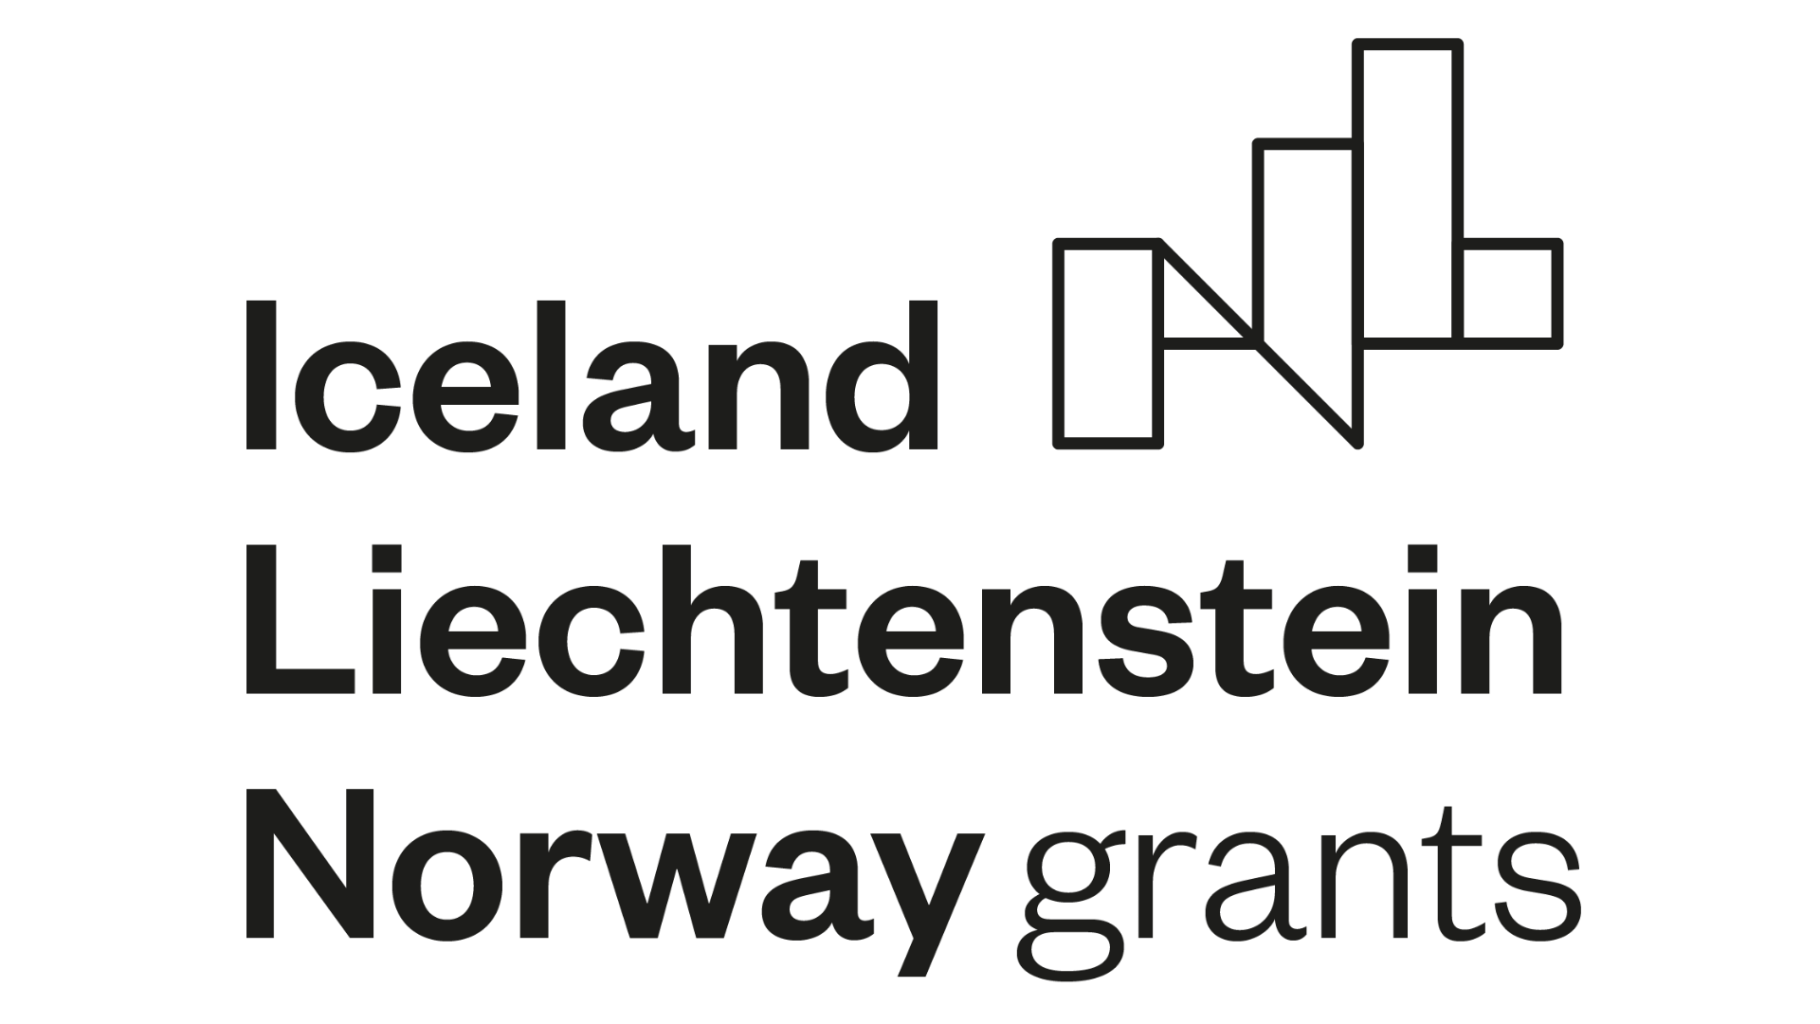 iceland_liechtenstein_norway_grants_0.png